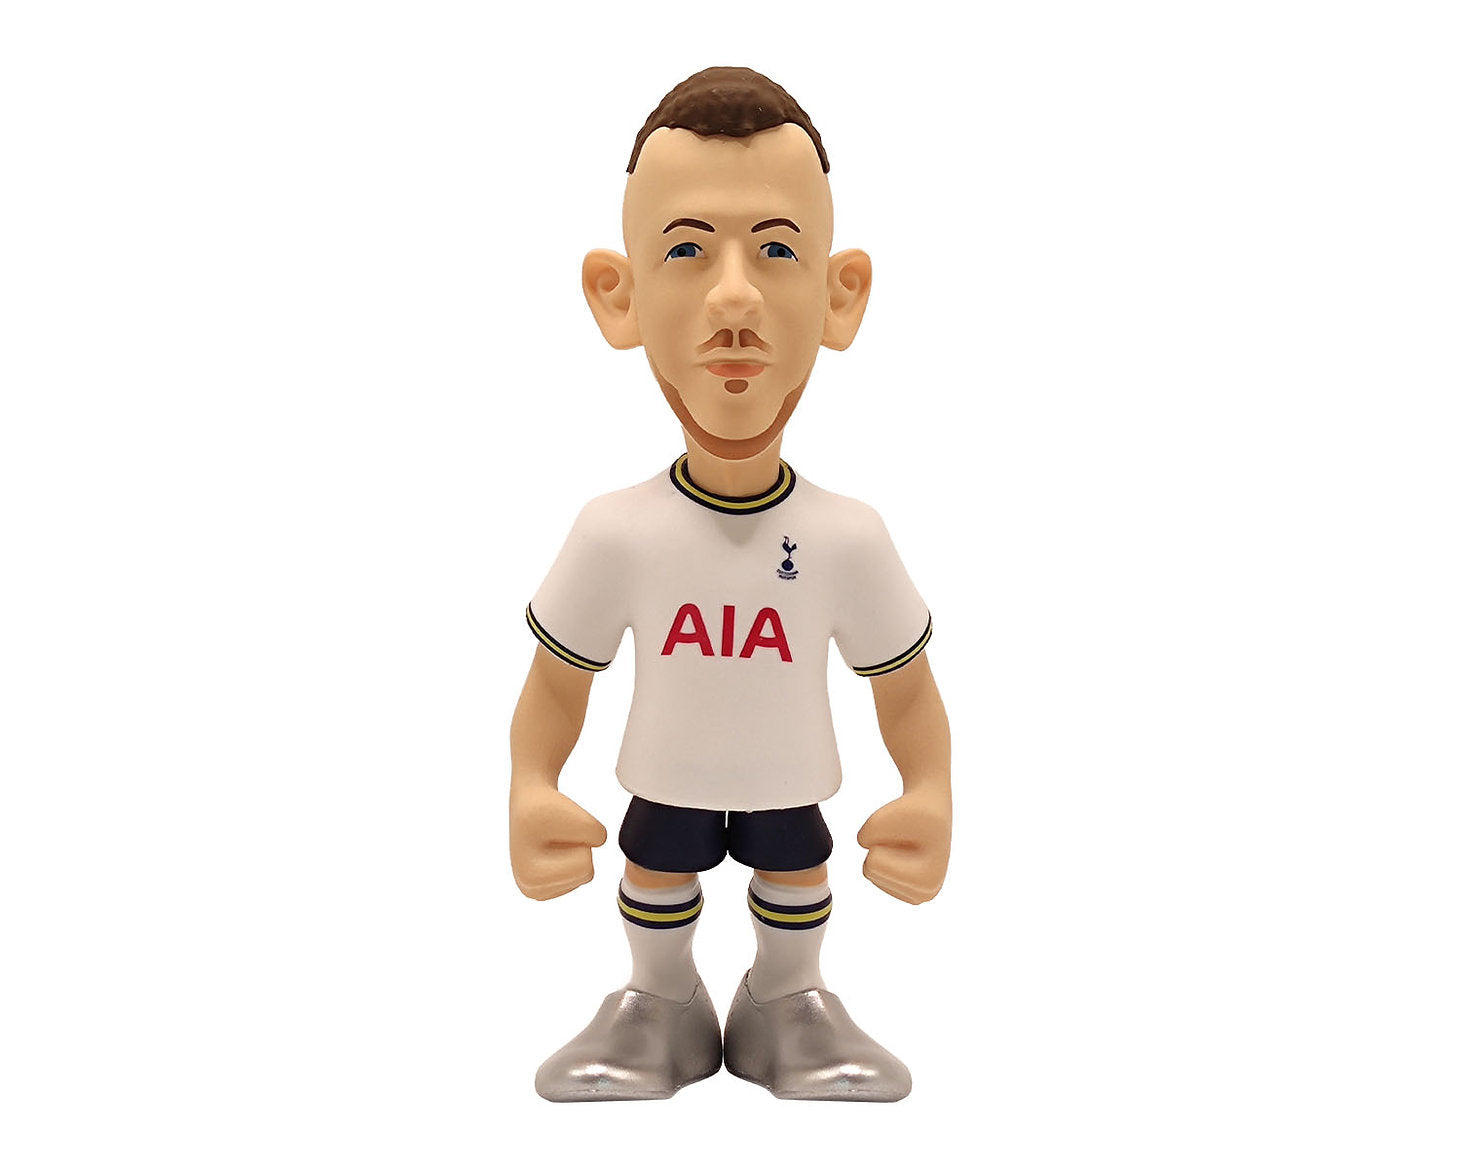 Minix - Football Stars #128 - Tottenham Hotspur Football Club - Ivan Perišic "14" - Figurine 12cm